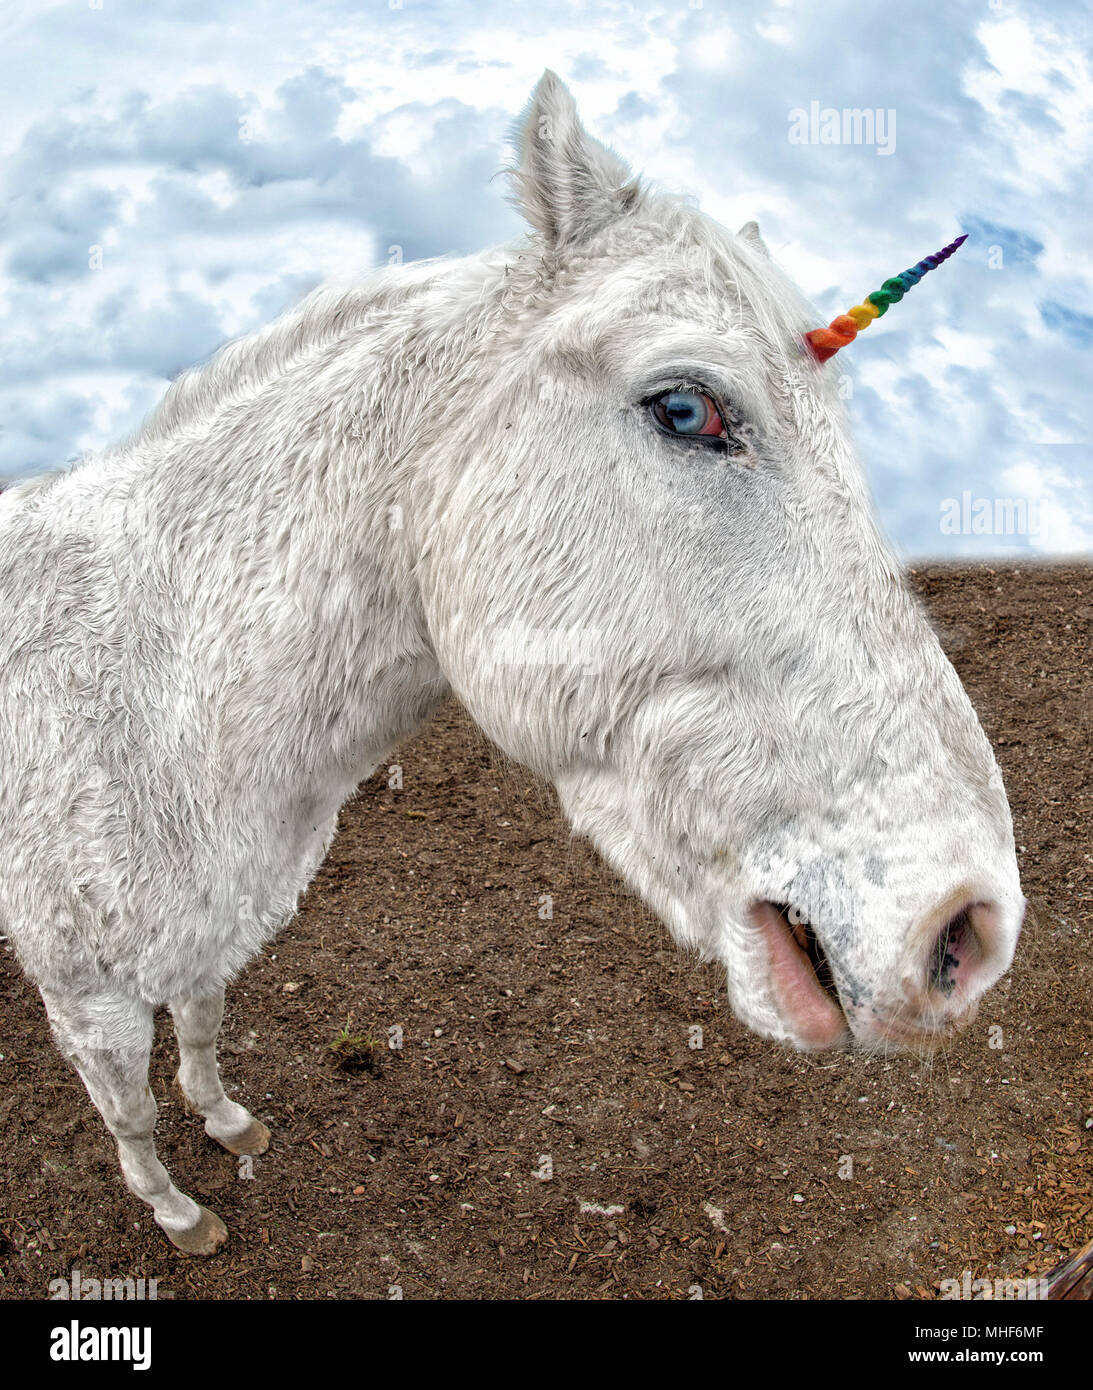 Unicorn Real white rainbow horn horse close up portrait Stock Photo - Alamy